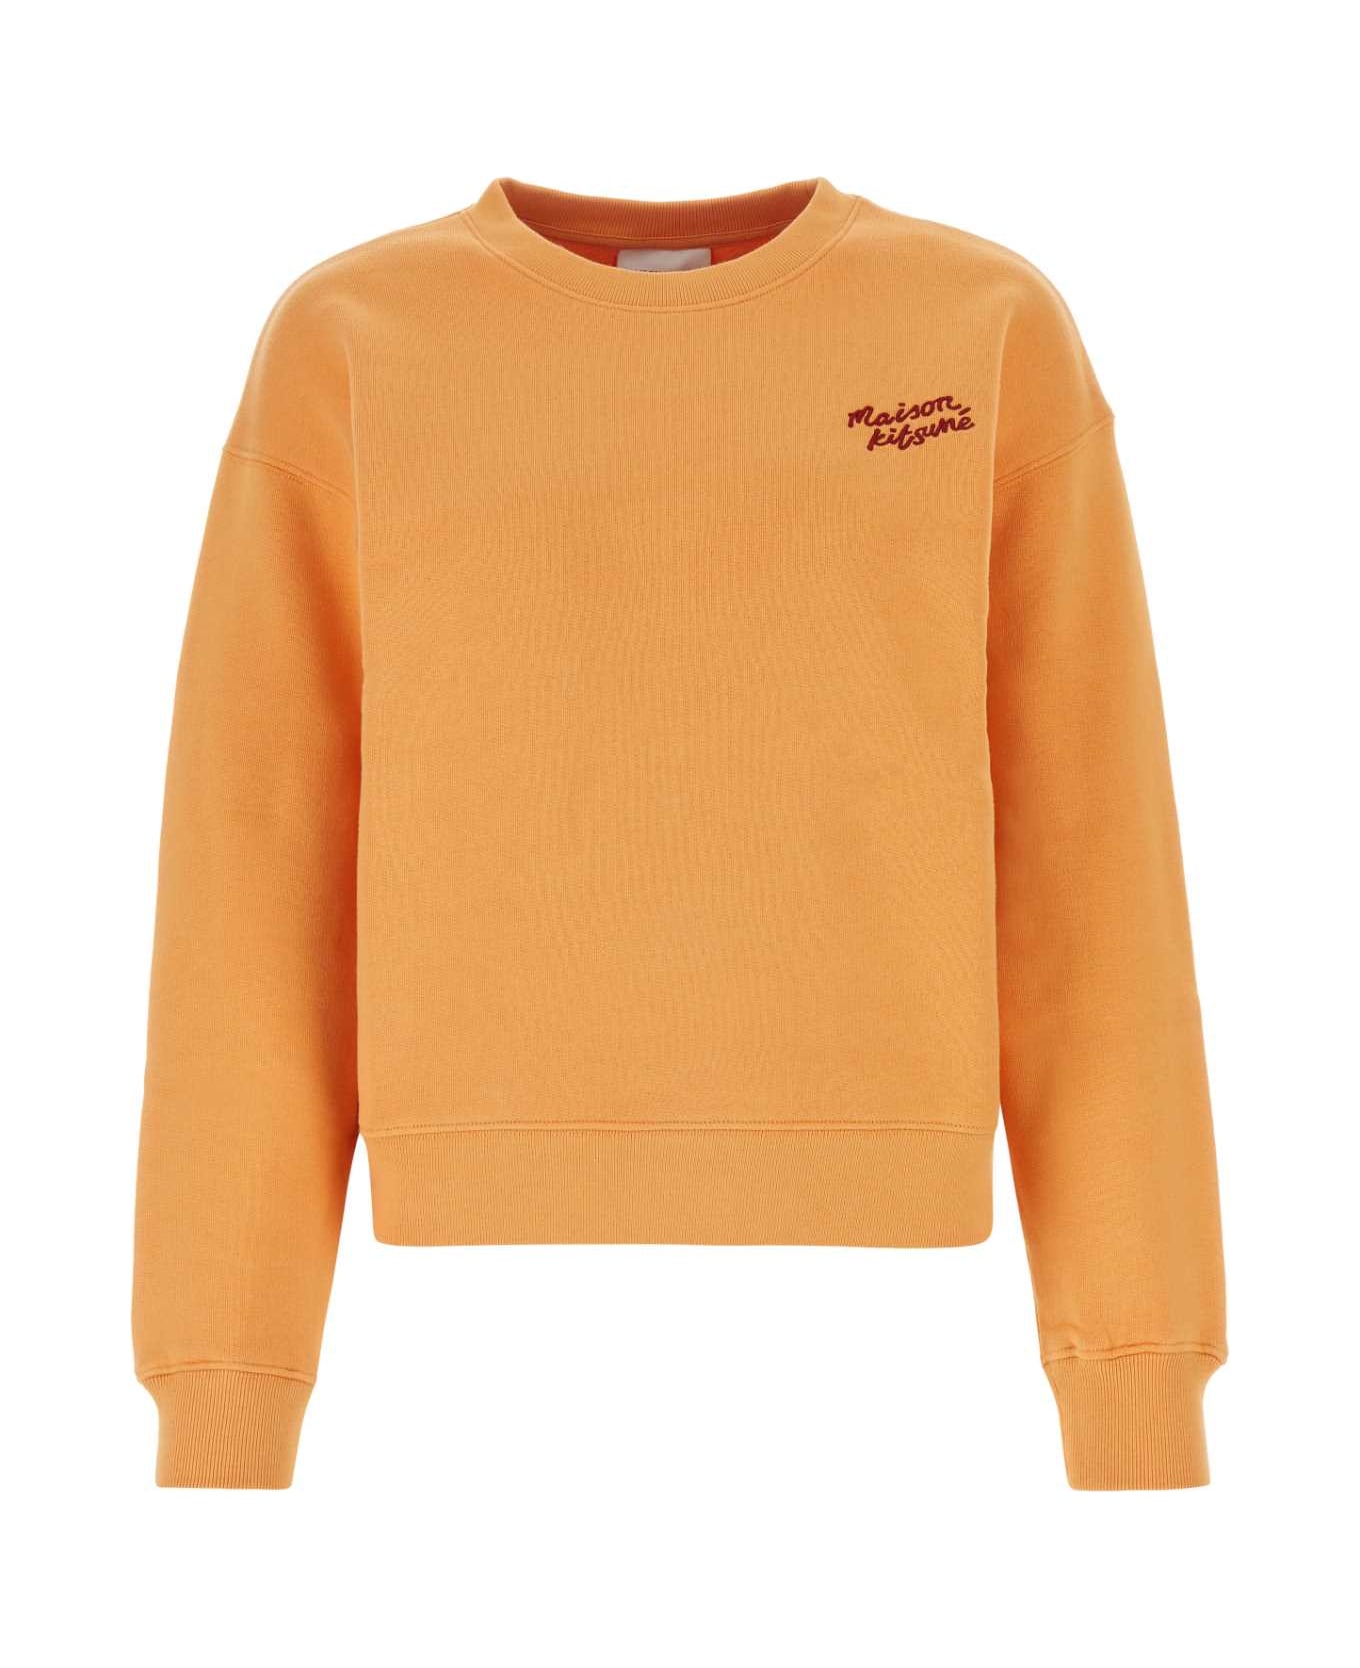 Maison Kitsuné Light Orange Cotton Sweatshirt - SUNSETORANGE